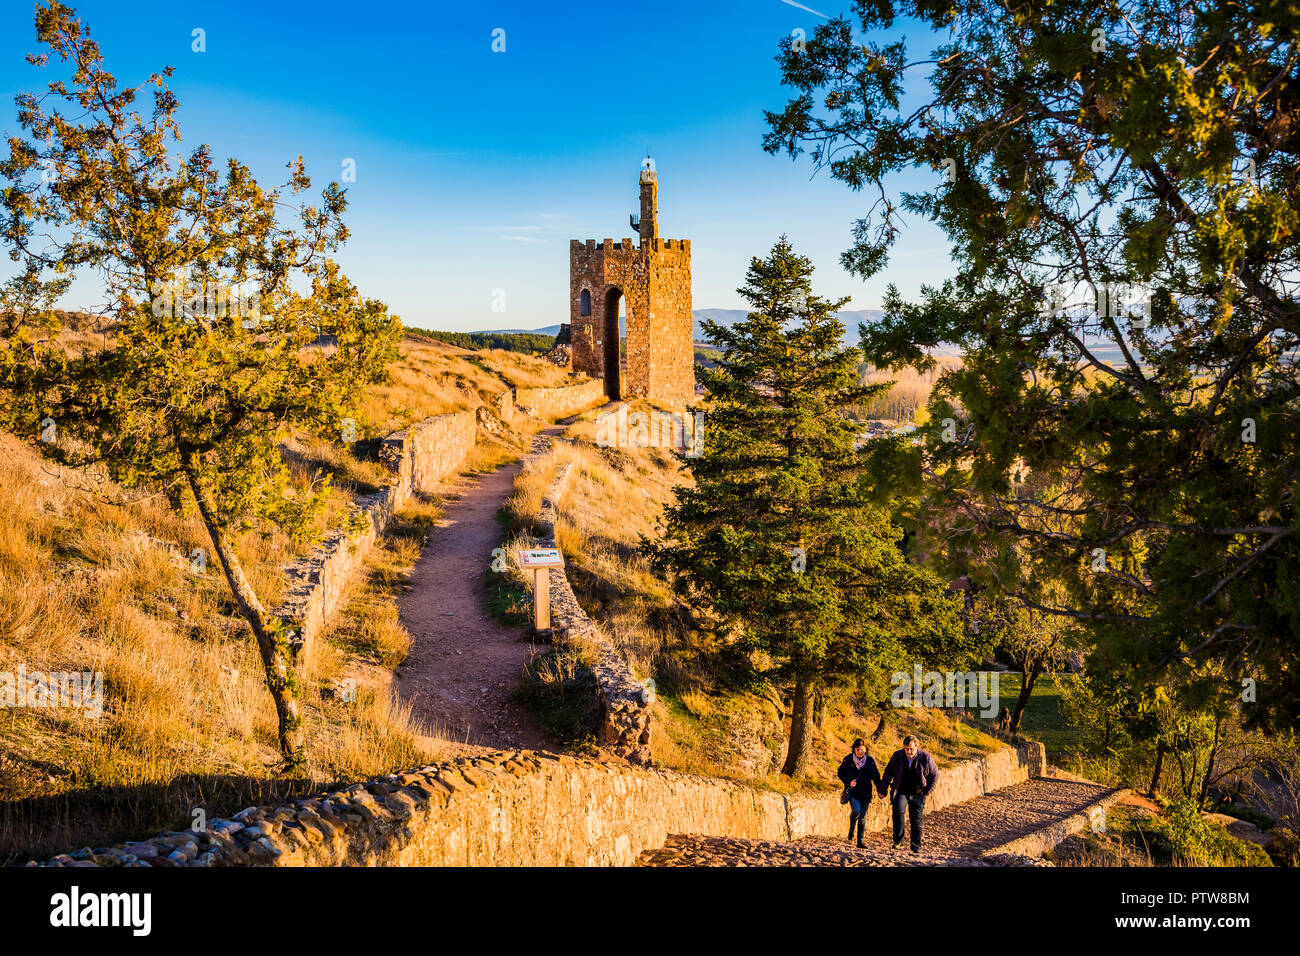 Watchtower La Martina. Ayllon, Segovia, Castilla y leon, Spain, Europe. Stock Photo